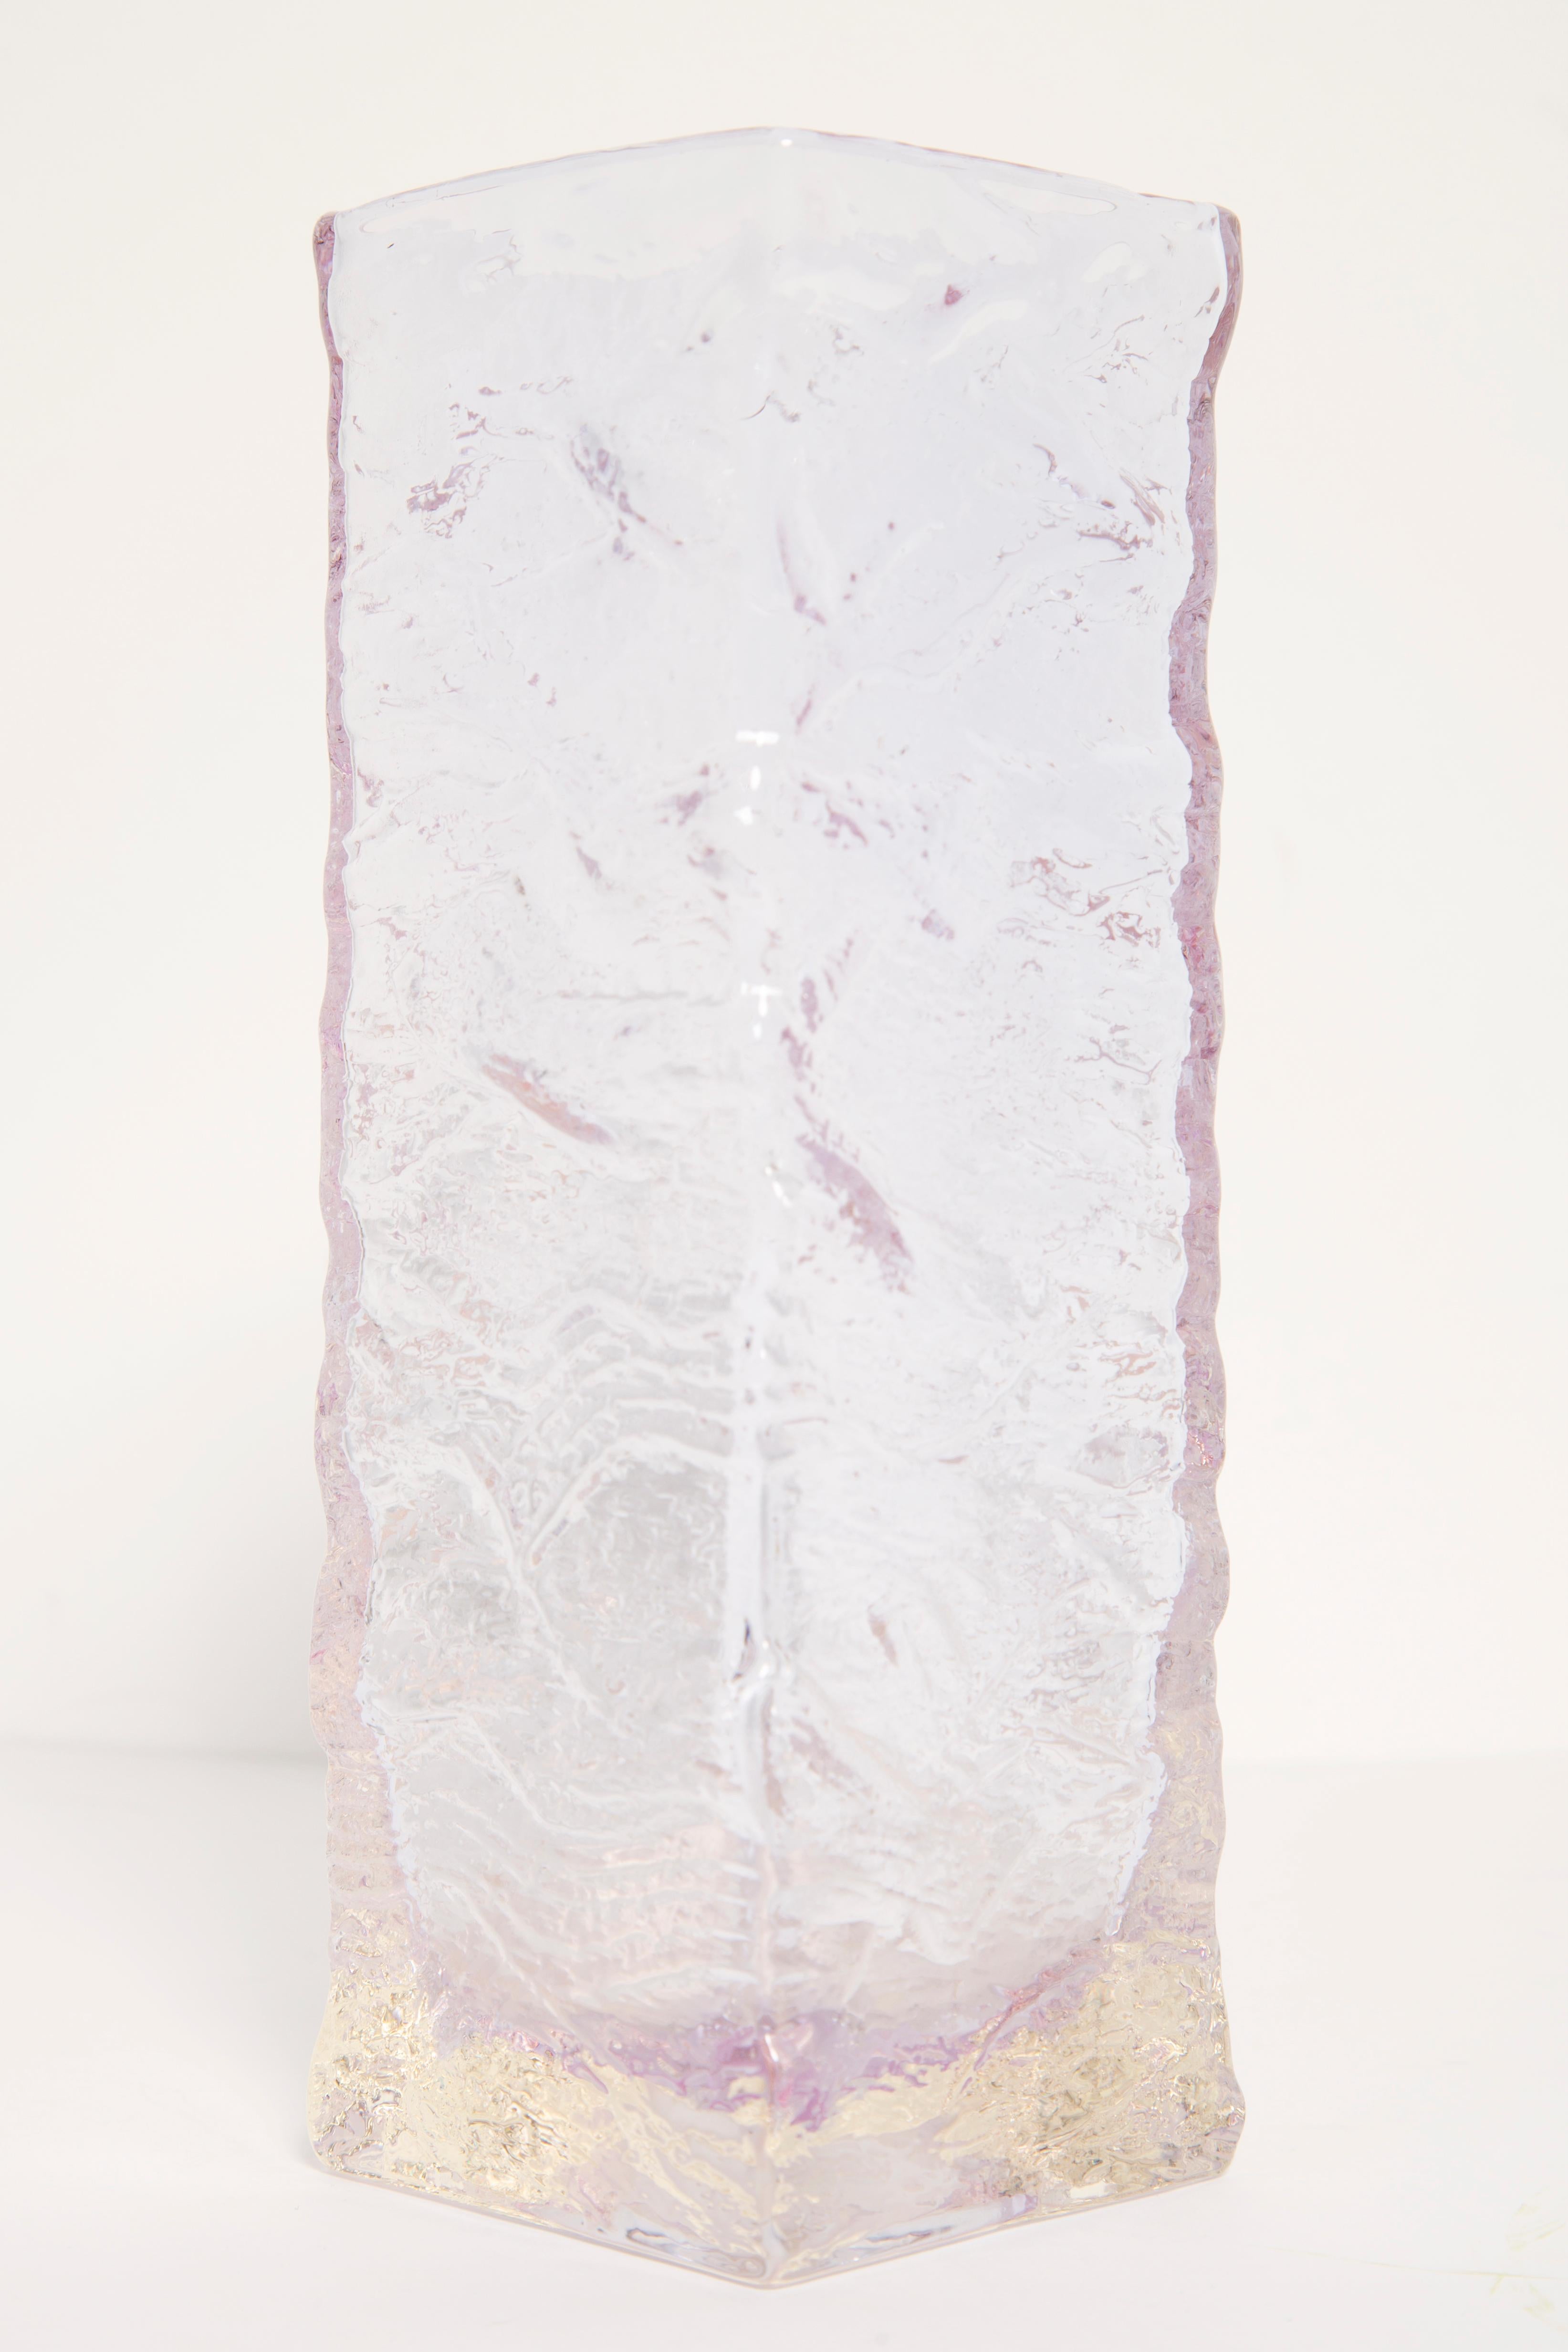 Mid-Century Modern Mid Century Vintage Ice Transparent Vase, Italy, 1960s For Sale